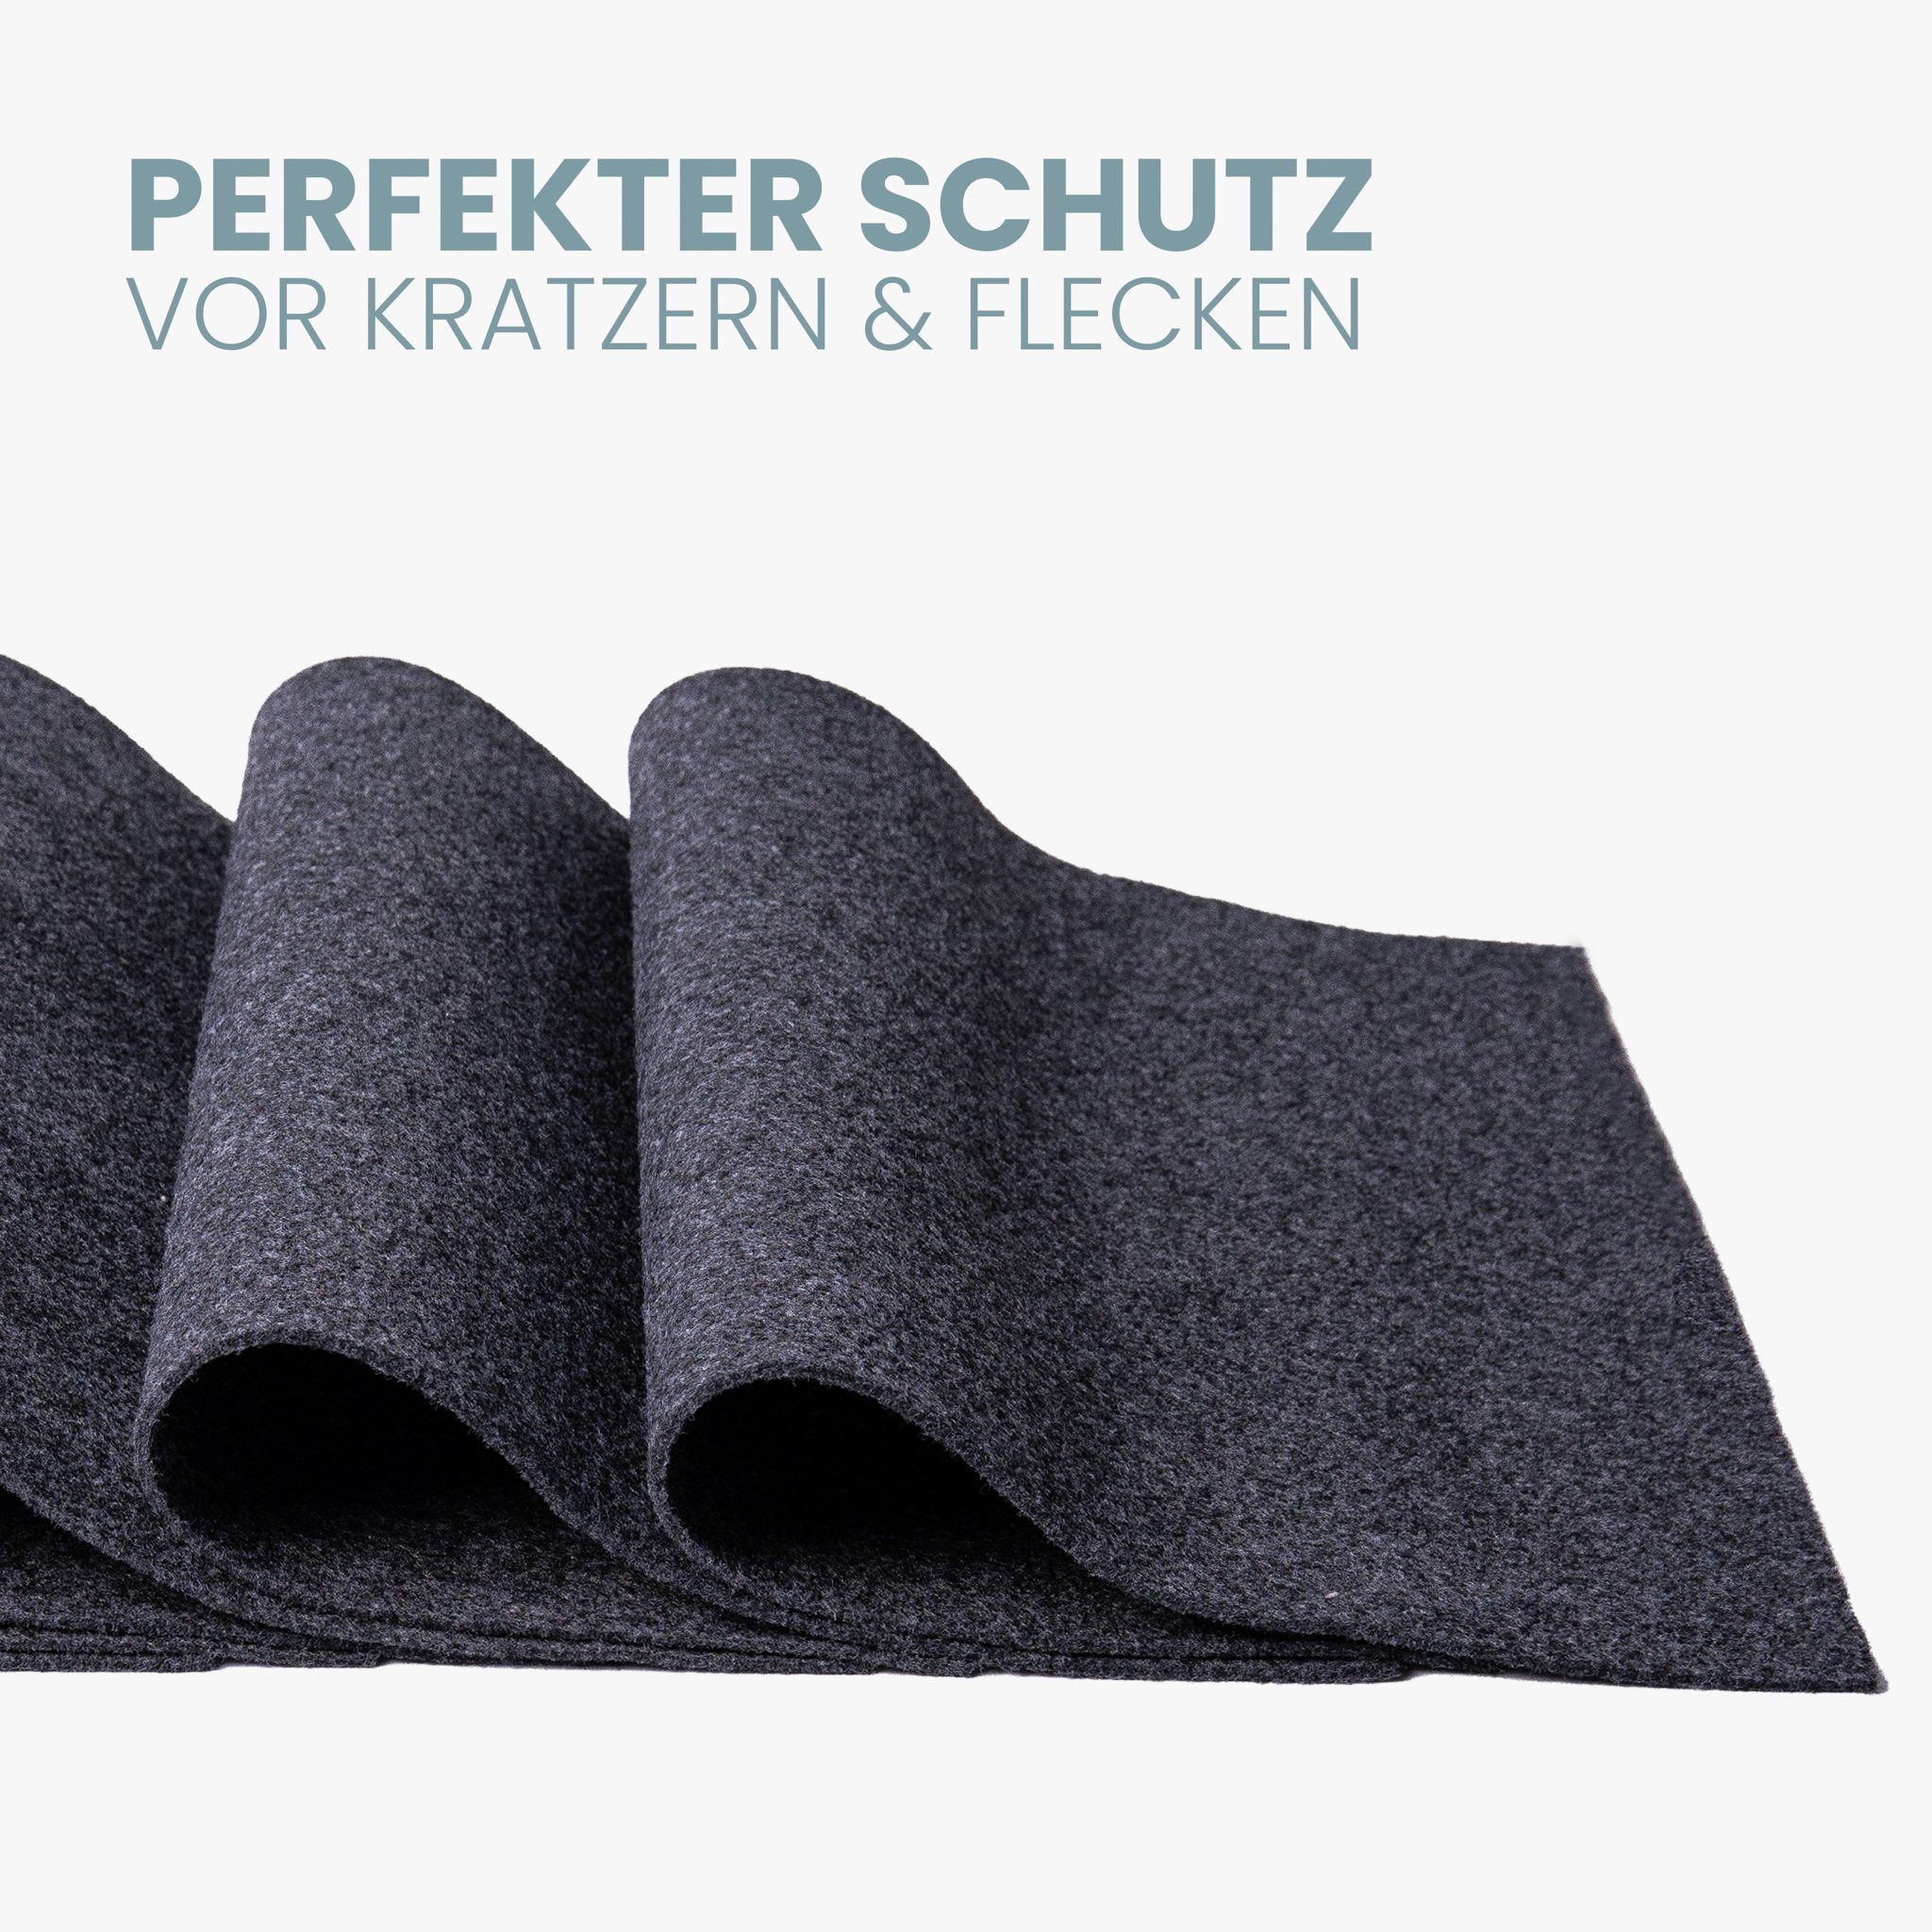 Platzset, Filz (40 x - Green Filz in and - 30cm) Easy Tischset Germany Made Platzsets, Recycling